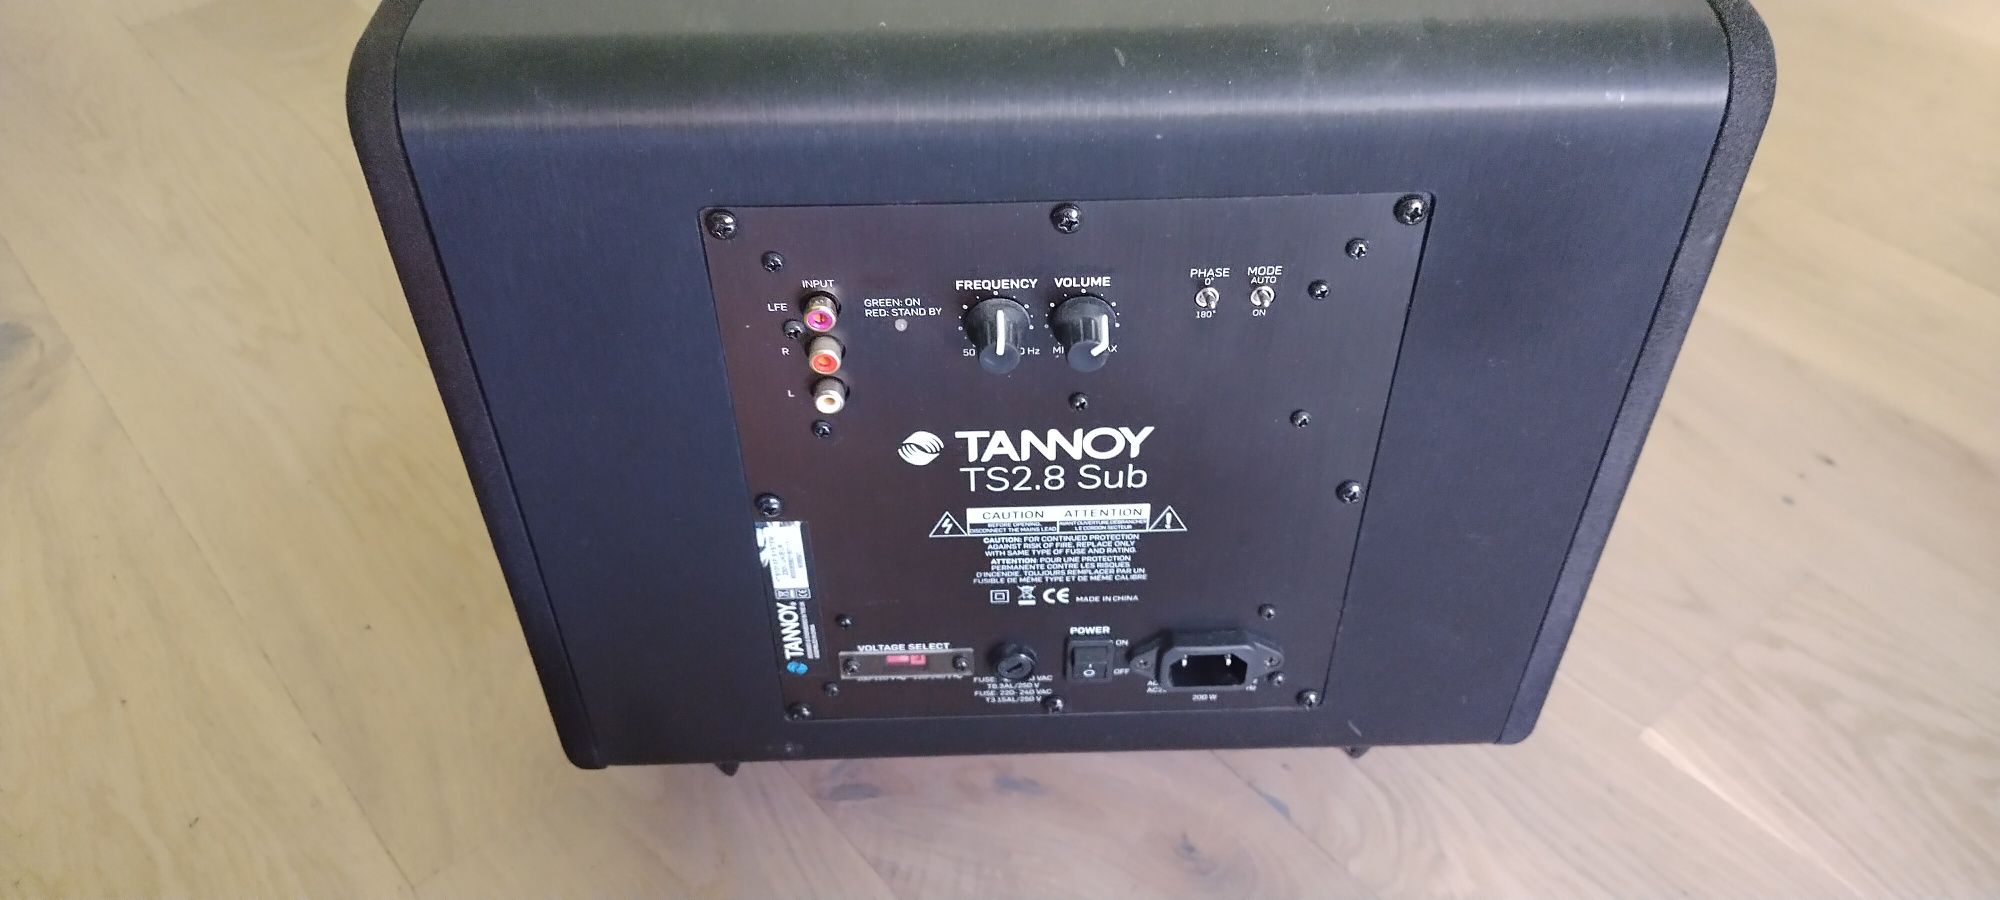 Tannoy TS 2.8 sub